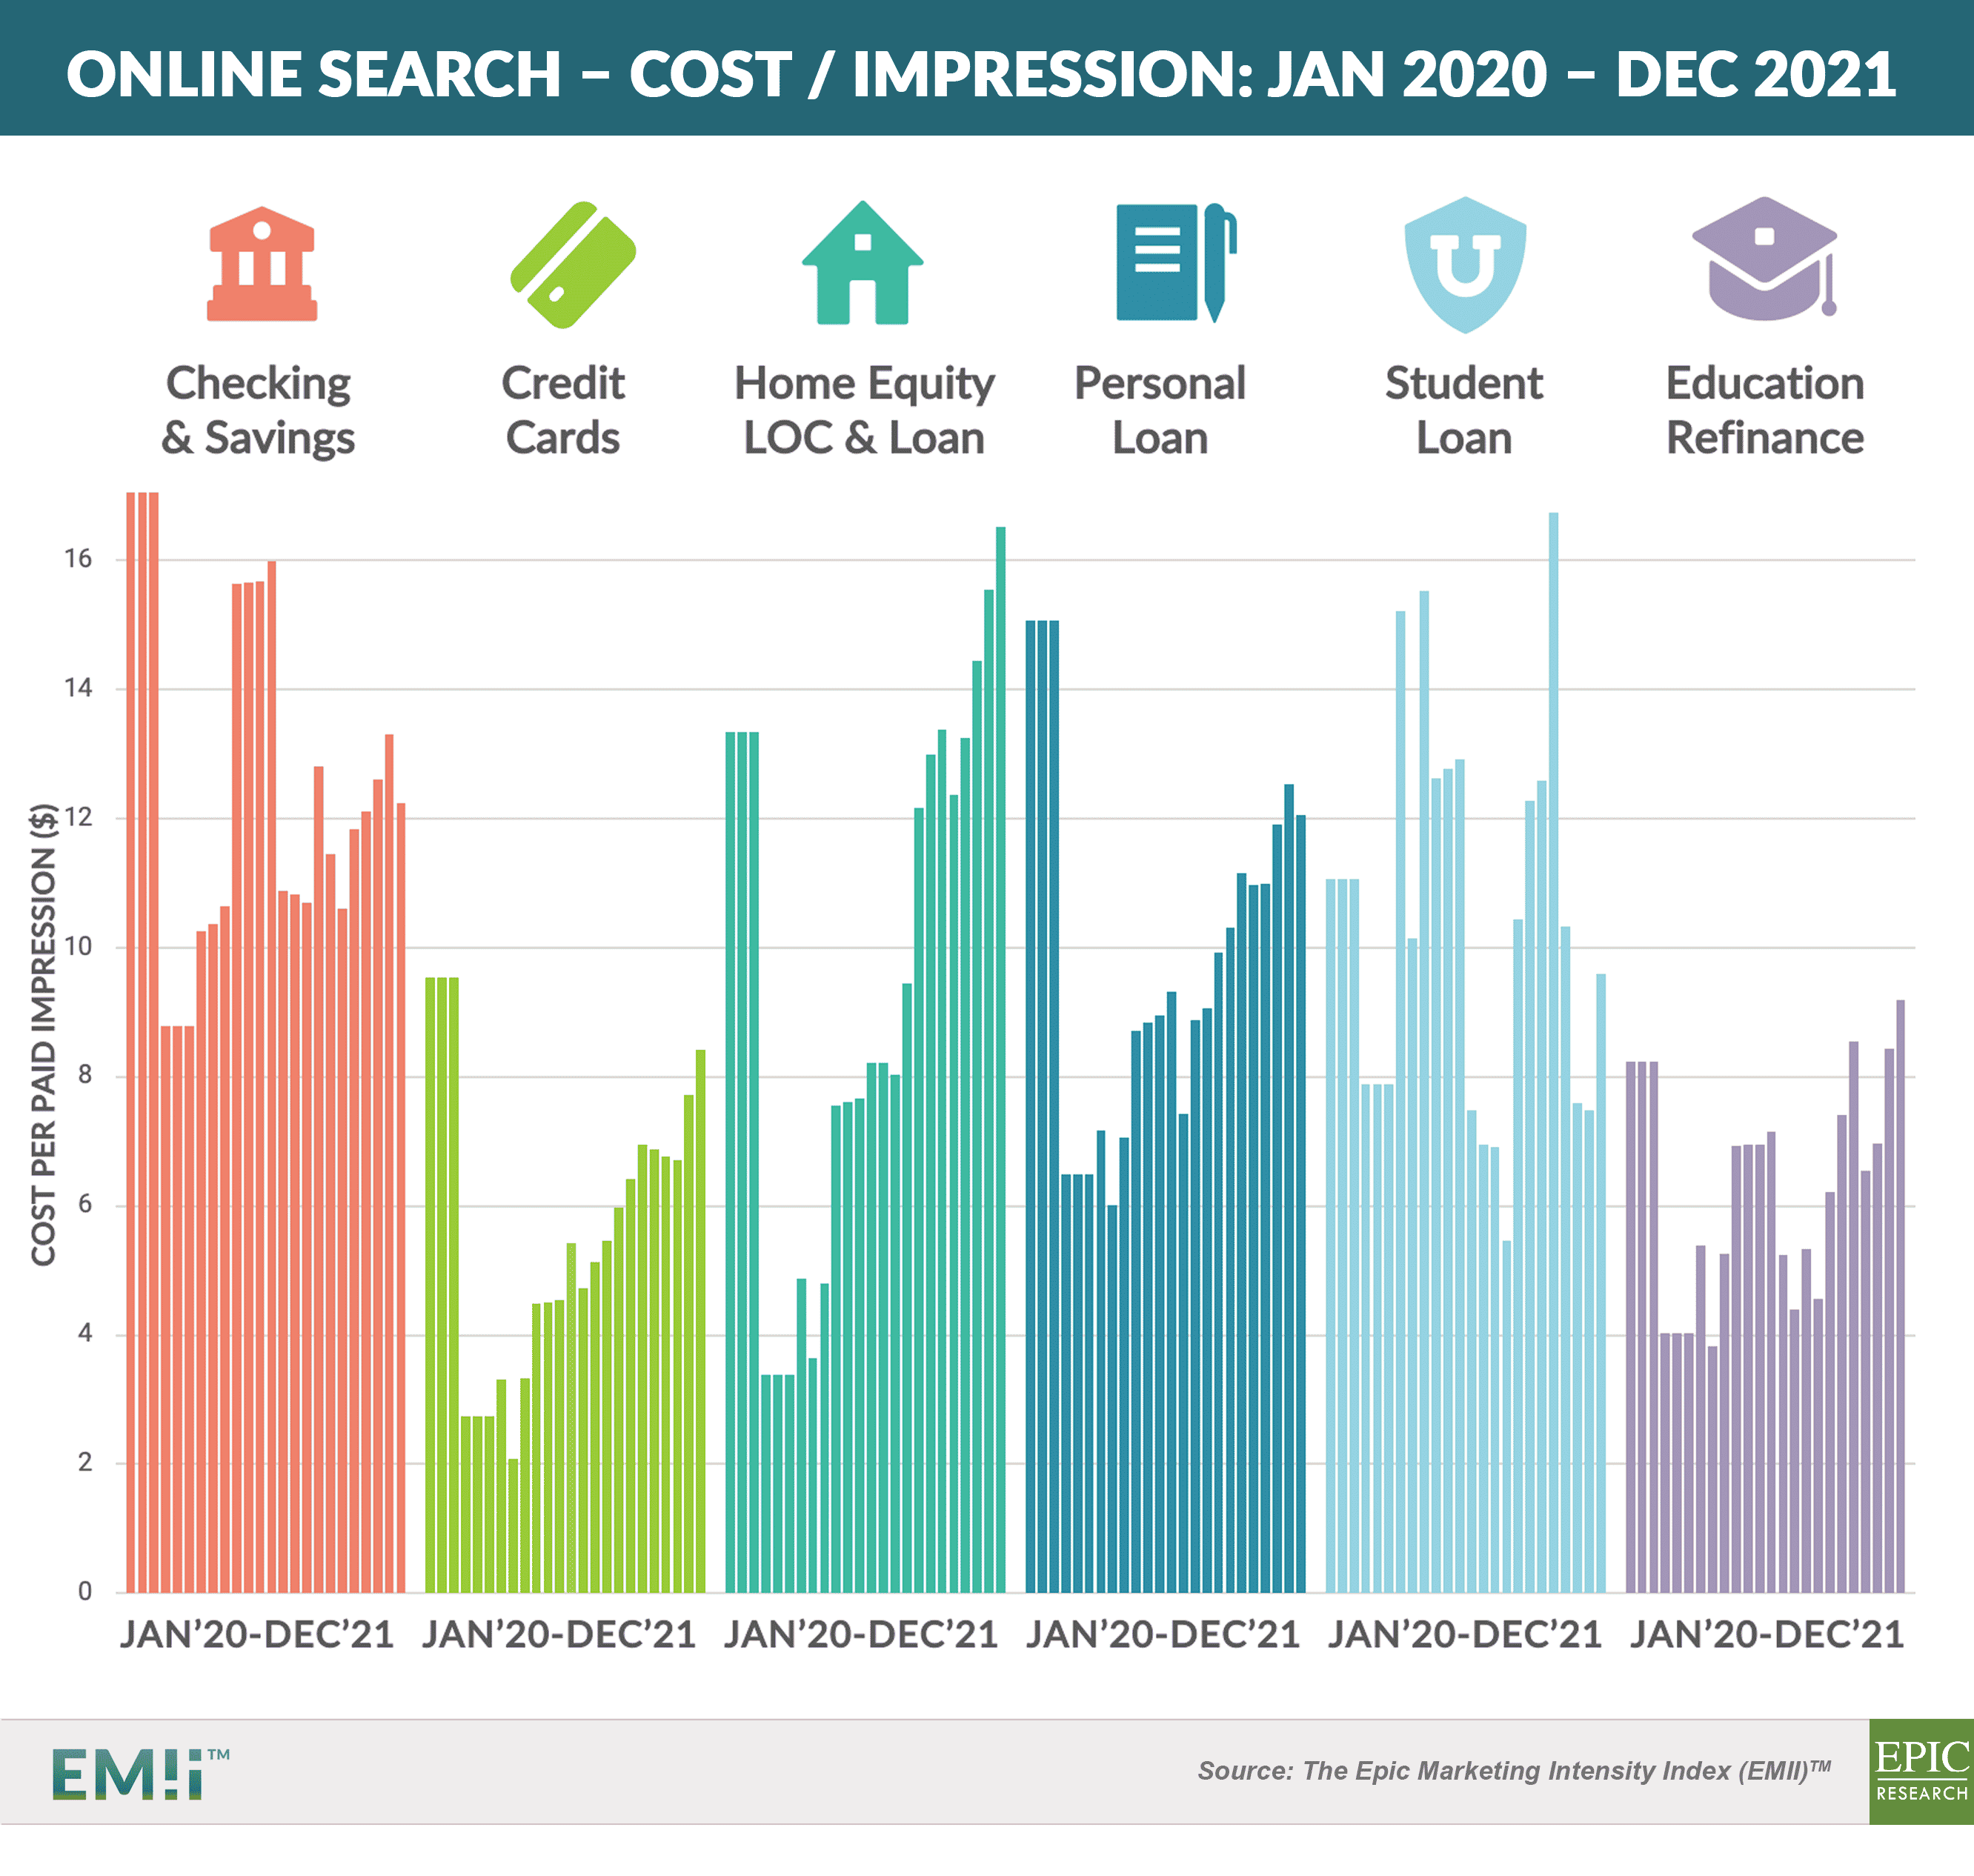 EMII - Google Search - Cost per impression JAN 20-DEC 21